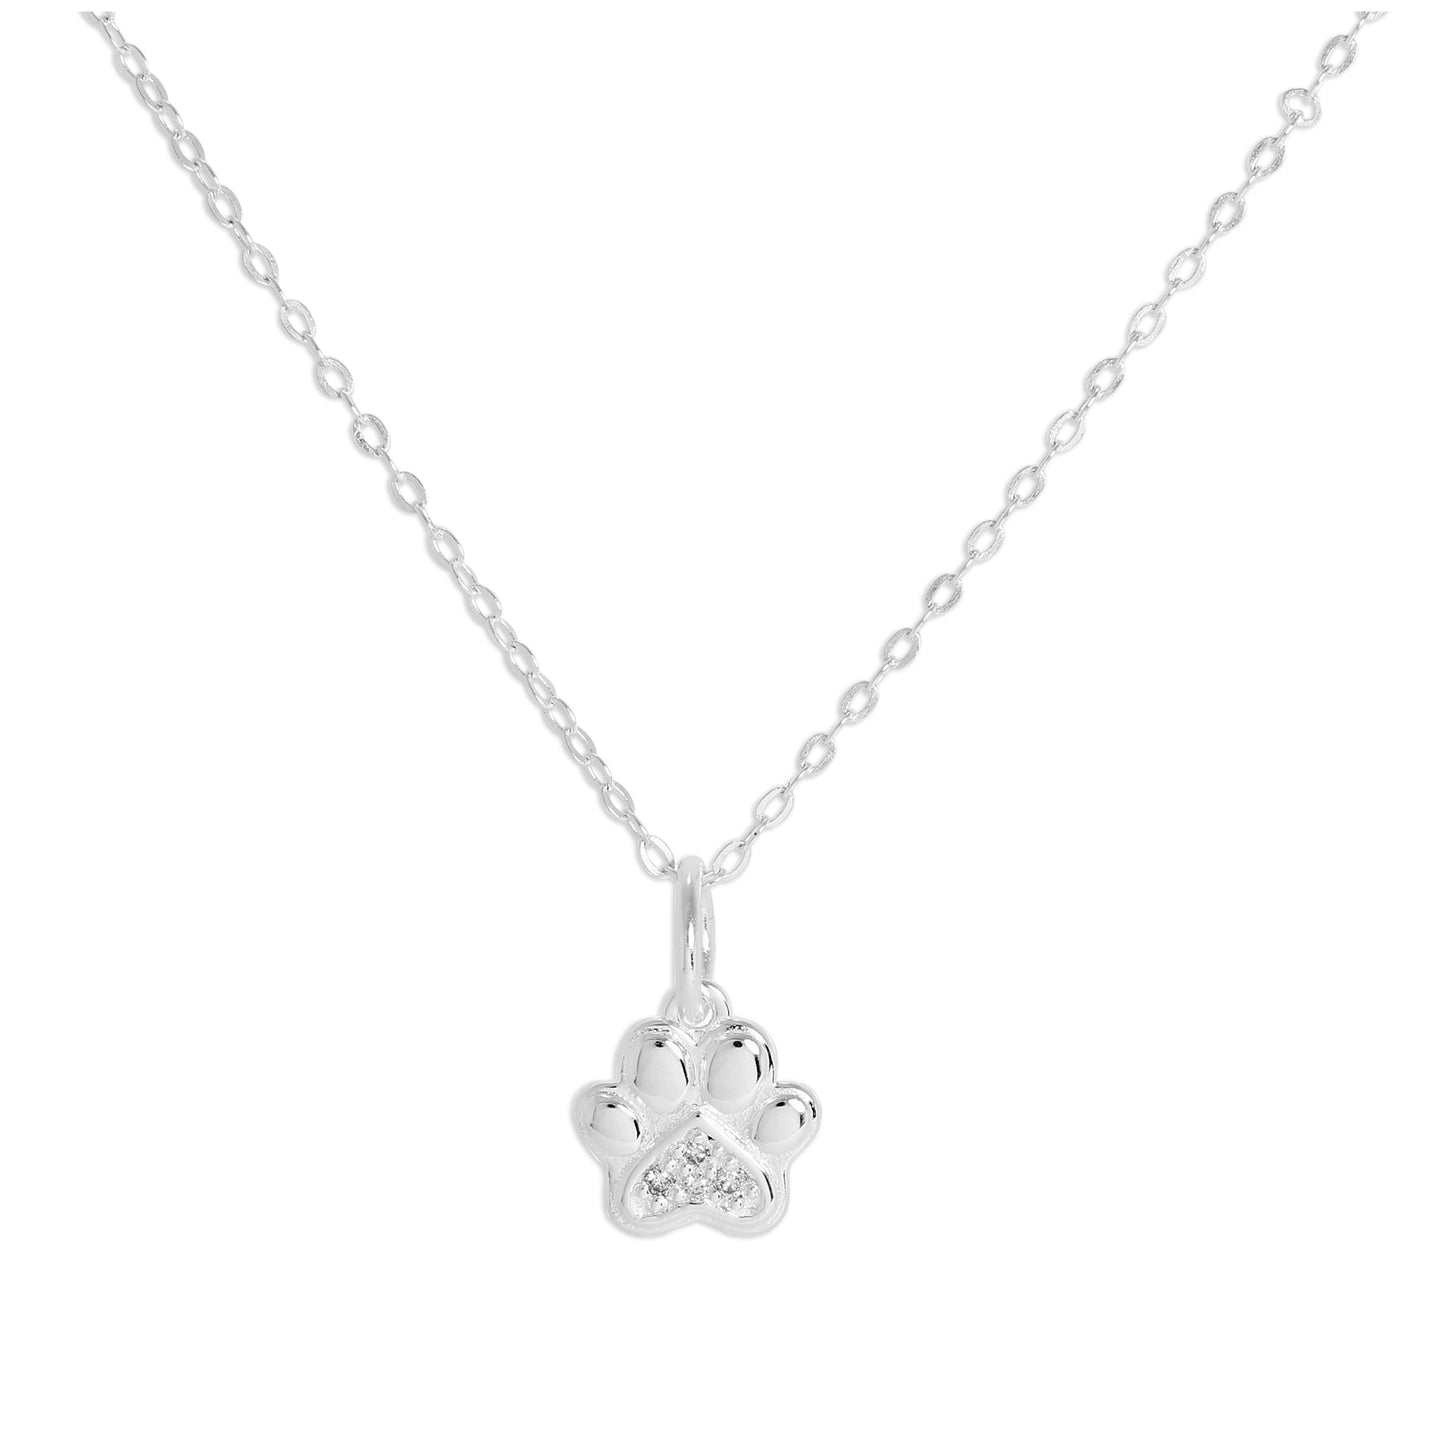 Sterlingsilber & Echt Diamant Pfotenabdruck Halskette